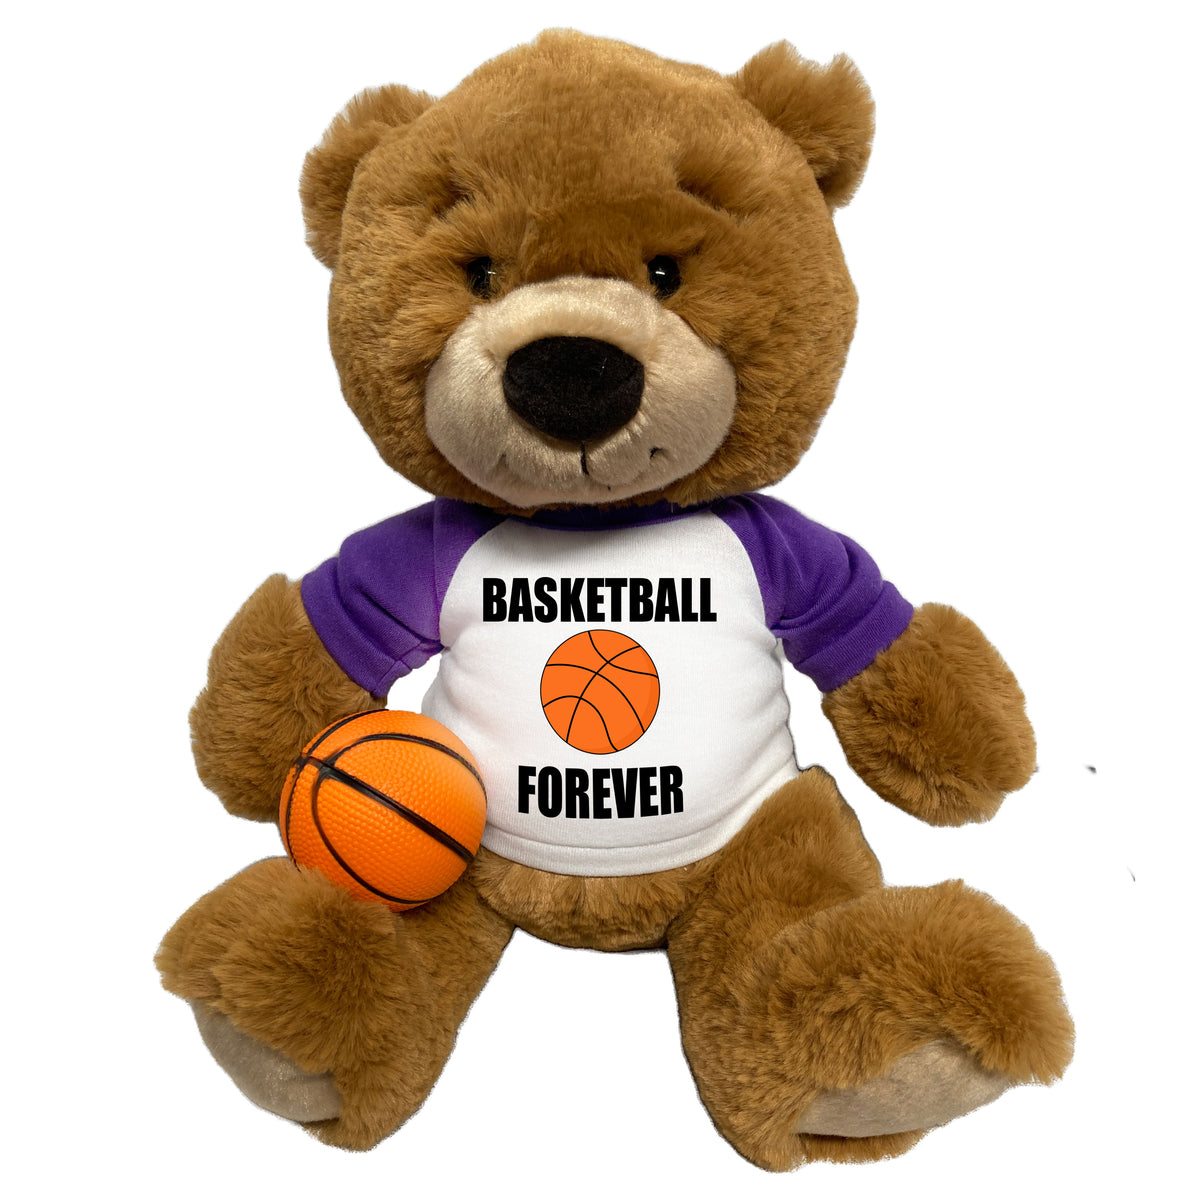 Basketball Teddy Bear - Personalized 14" Ginger Bear